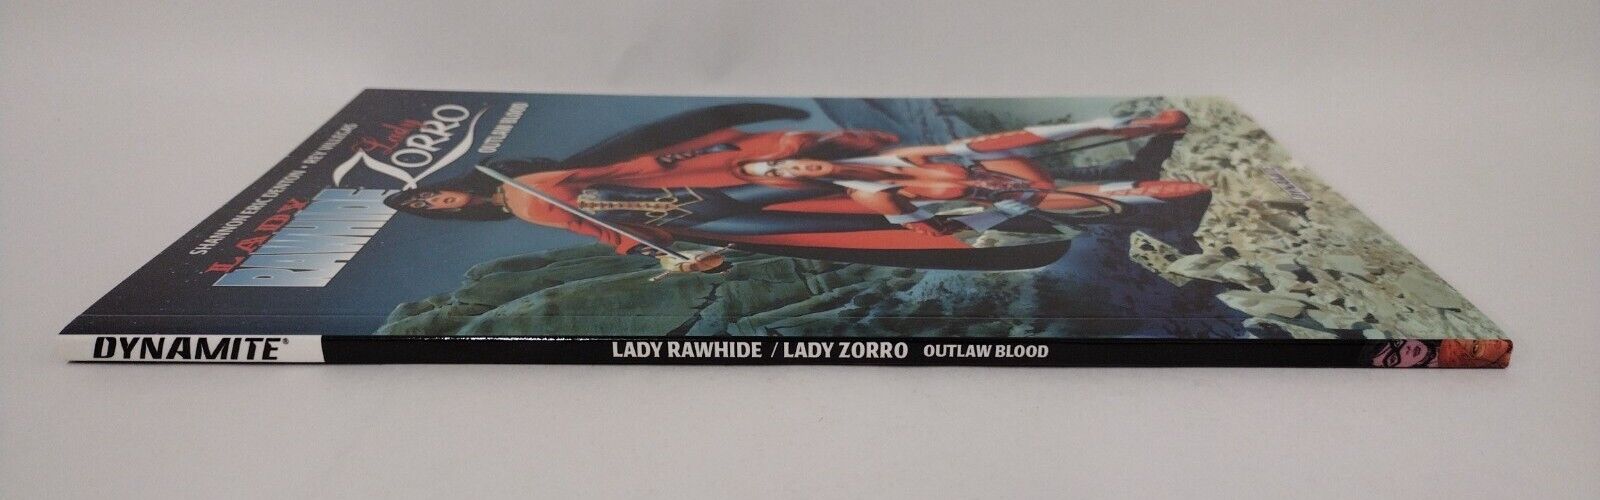 Lady Rawhide Lady Zorro (2016) Dynamite TPB SC Shannon Denton Rey Villegas New